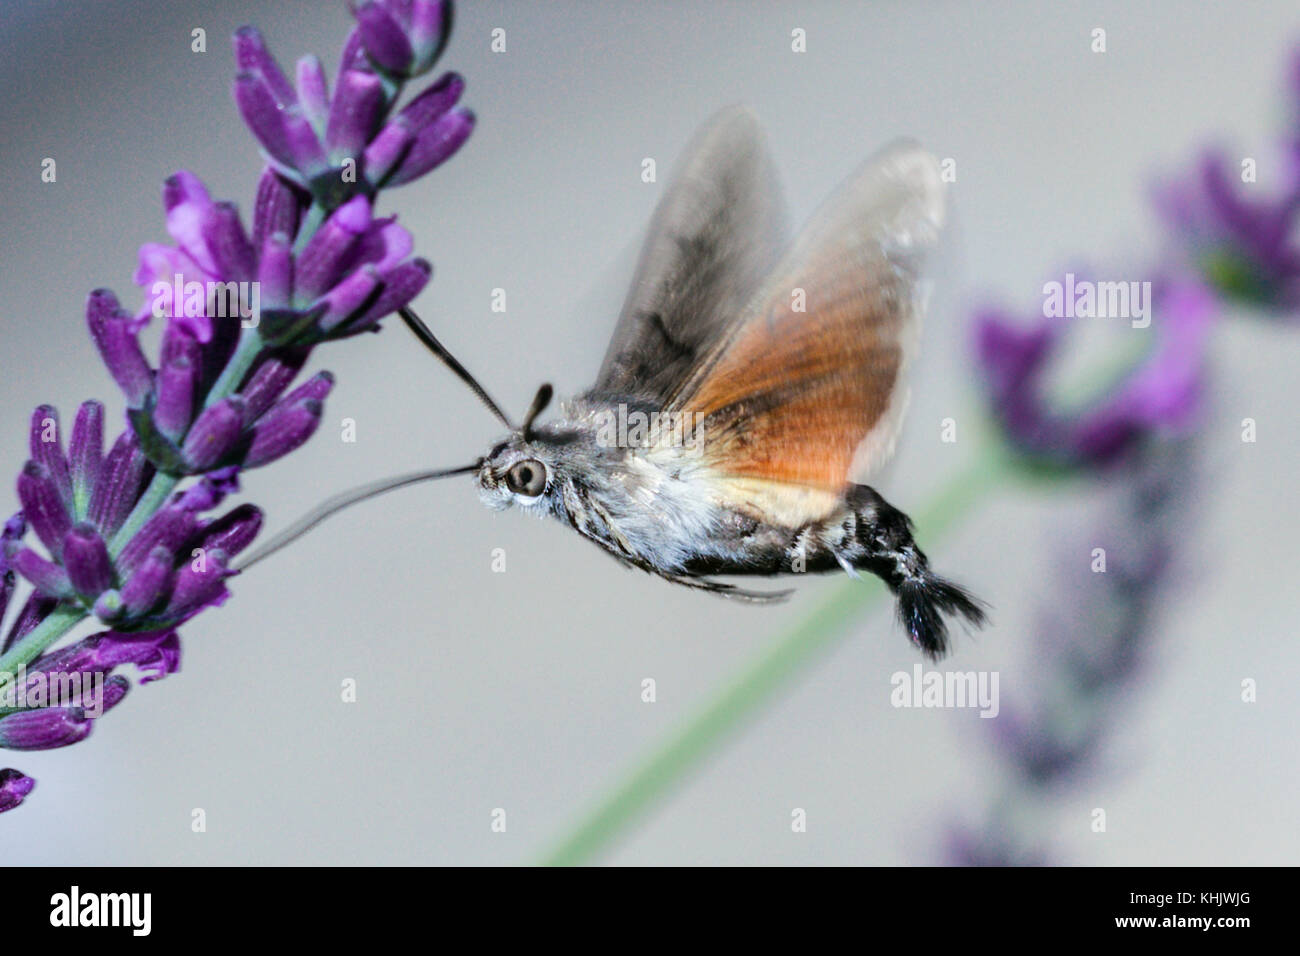 Hummingbird Hawk Moth feeding on flower, Macroglossum stellatarum, Munich, Bavaria, Germany Stock Photo